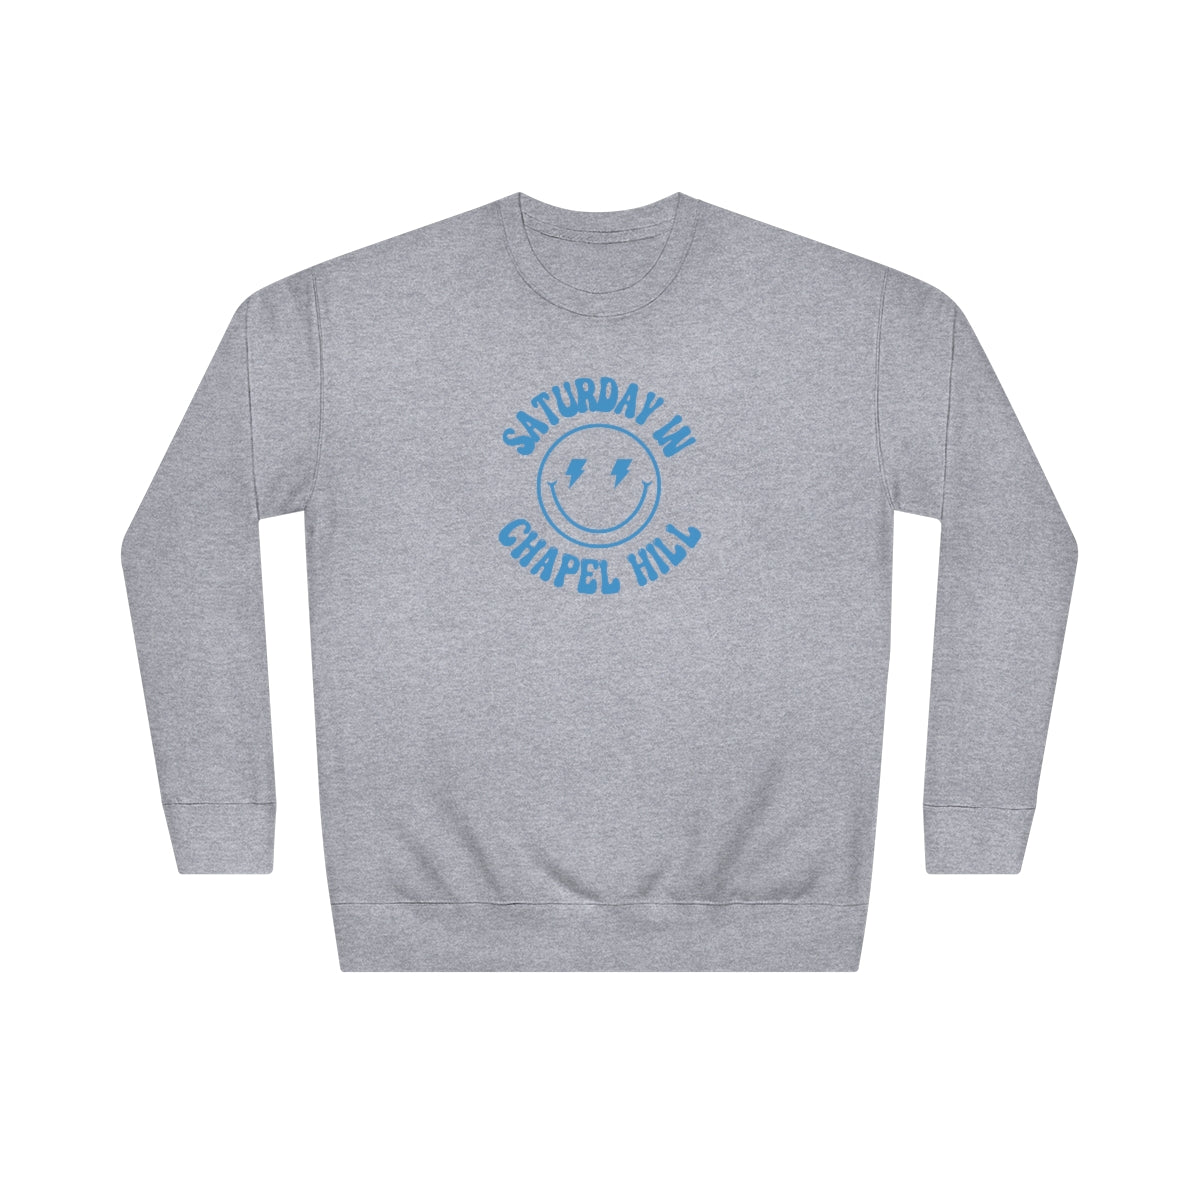 Smiley Chapel Hill Crew Sweatshirt - GG - CH